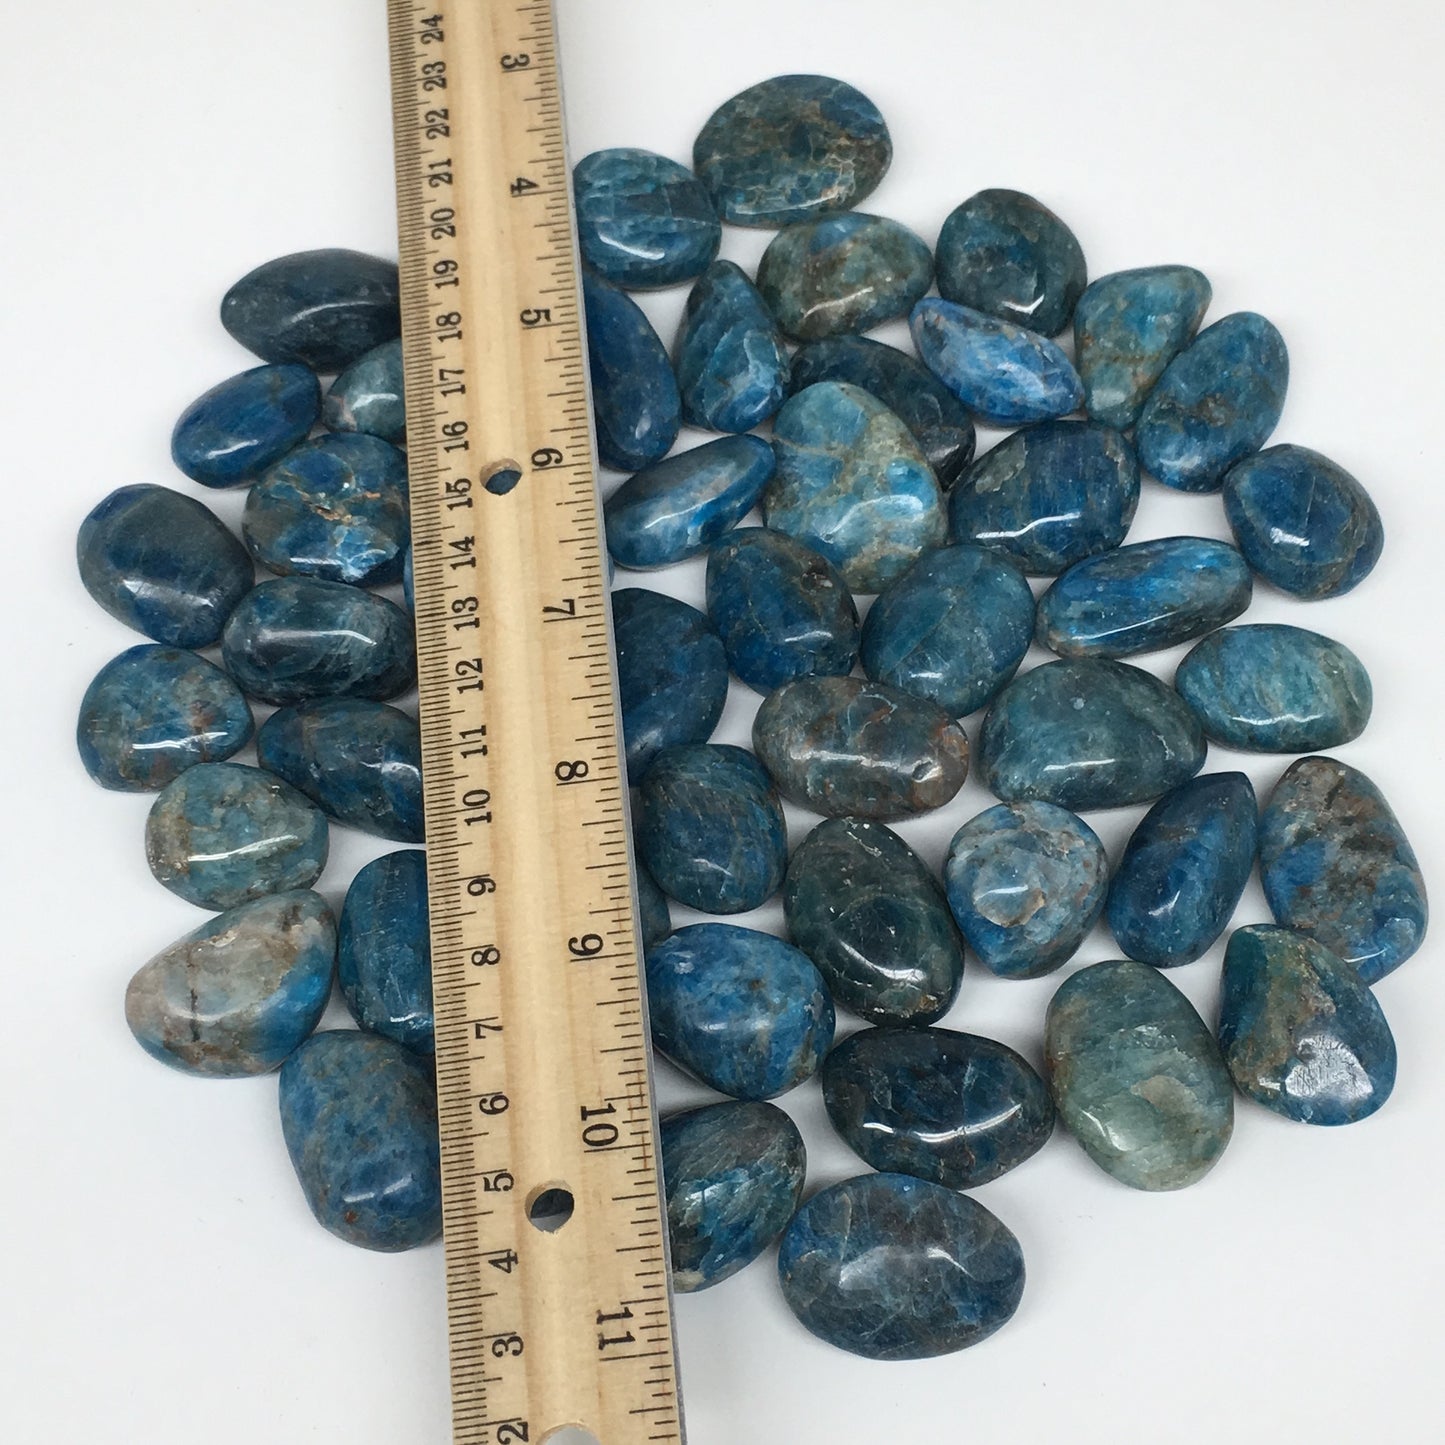 1pc, 10-20g,1"x-1.5" Blue Apatite Tumbled Small Gemstone Polished Reiki, B1807